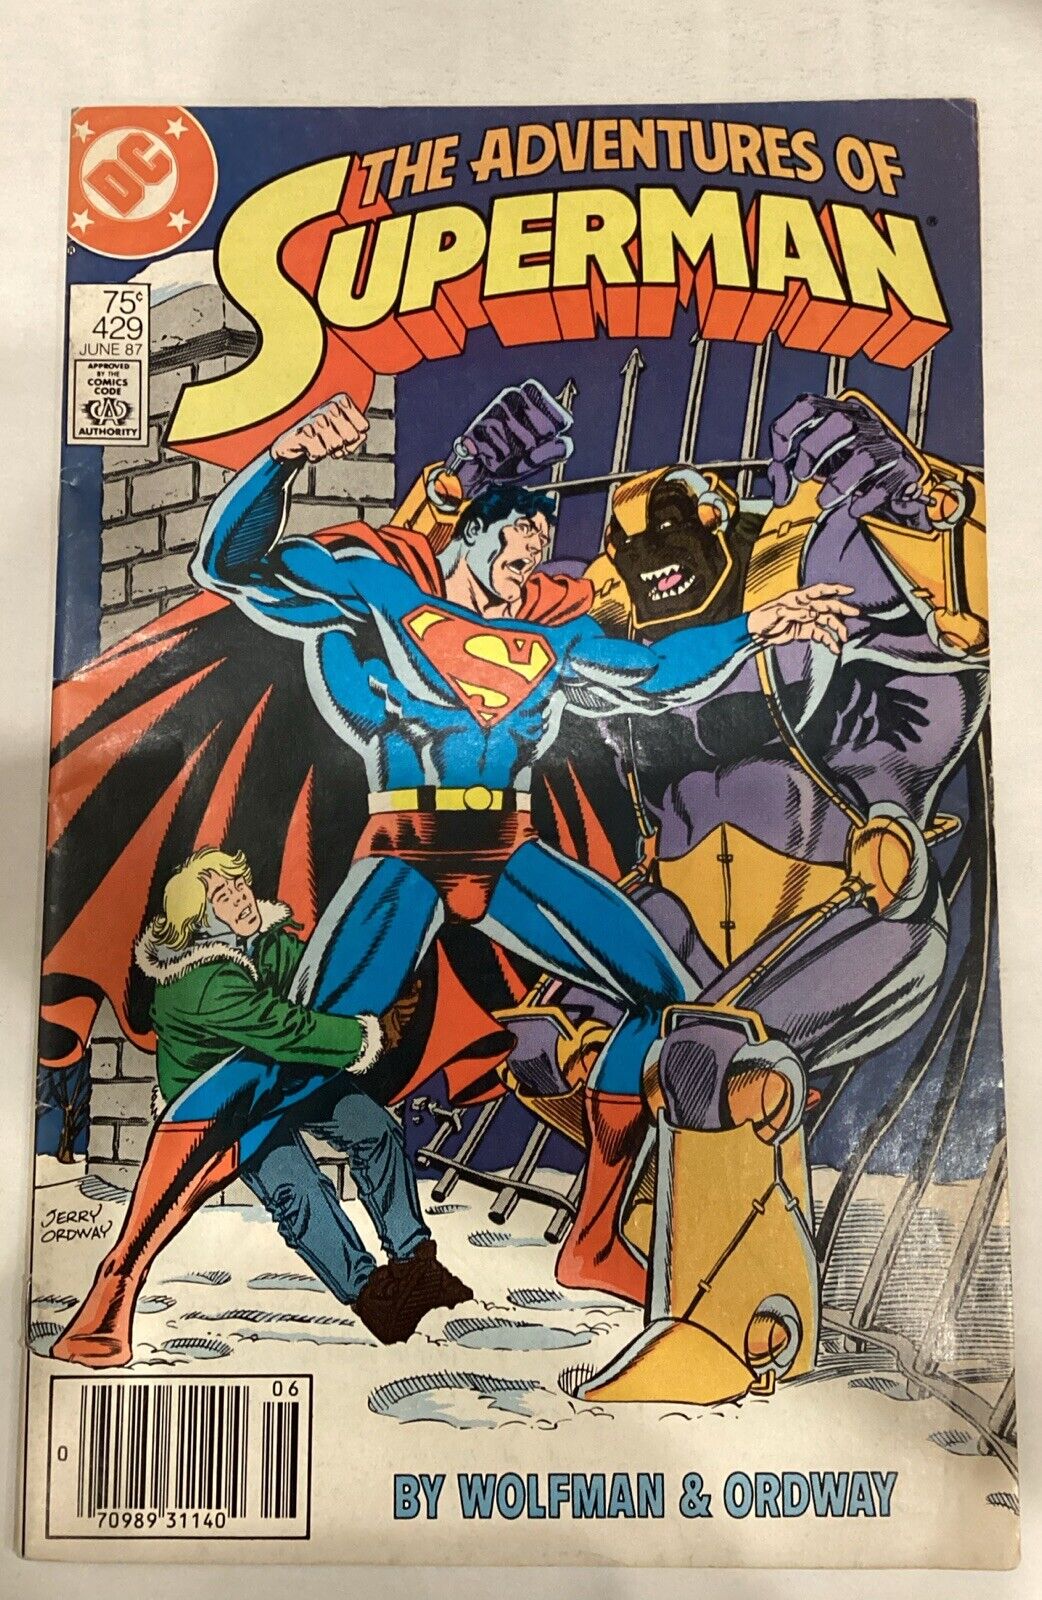 The Adventures of Superman #429 DC Comics (1987)